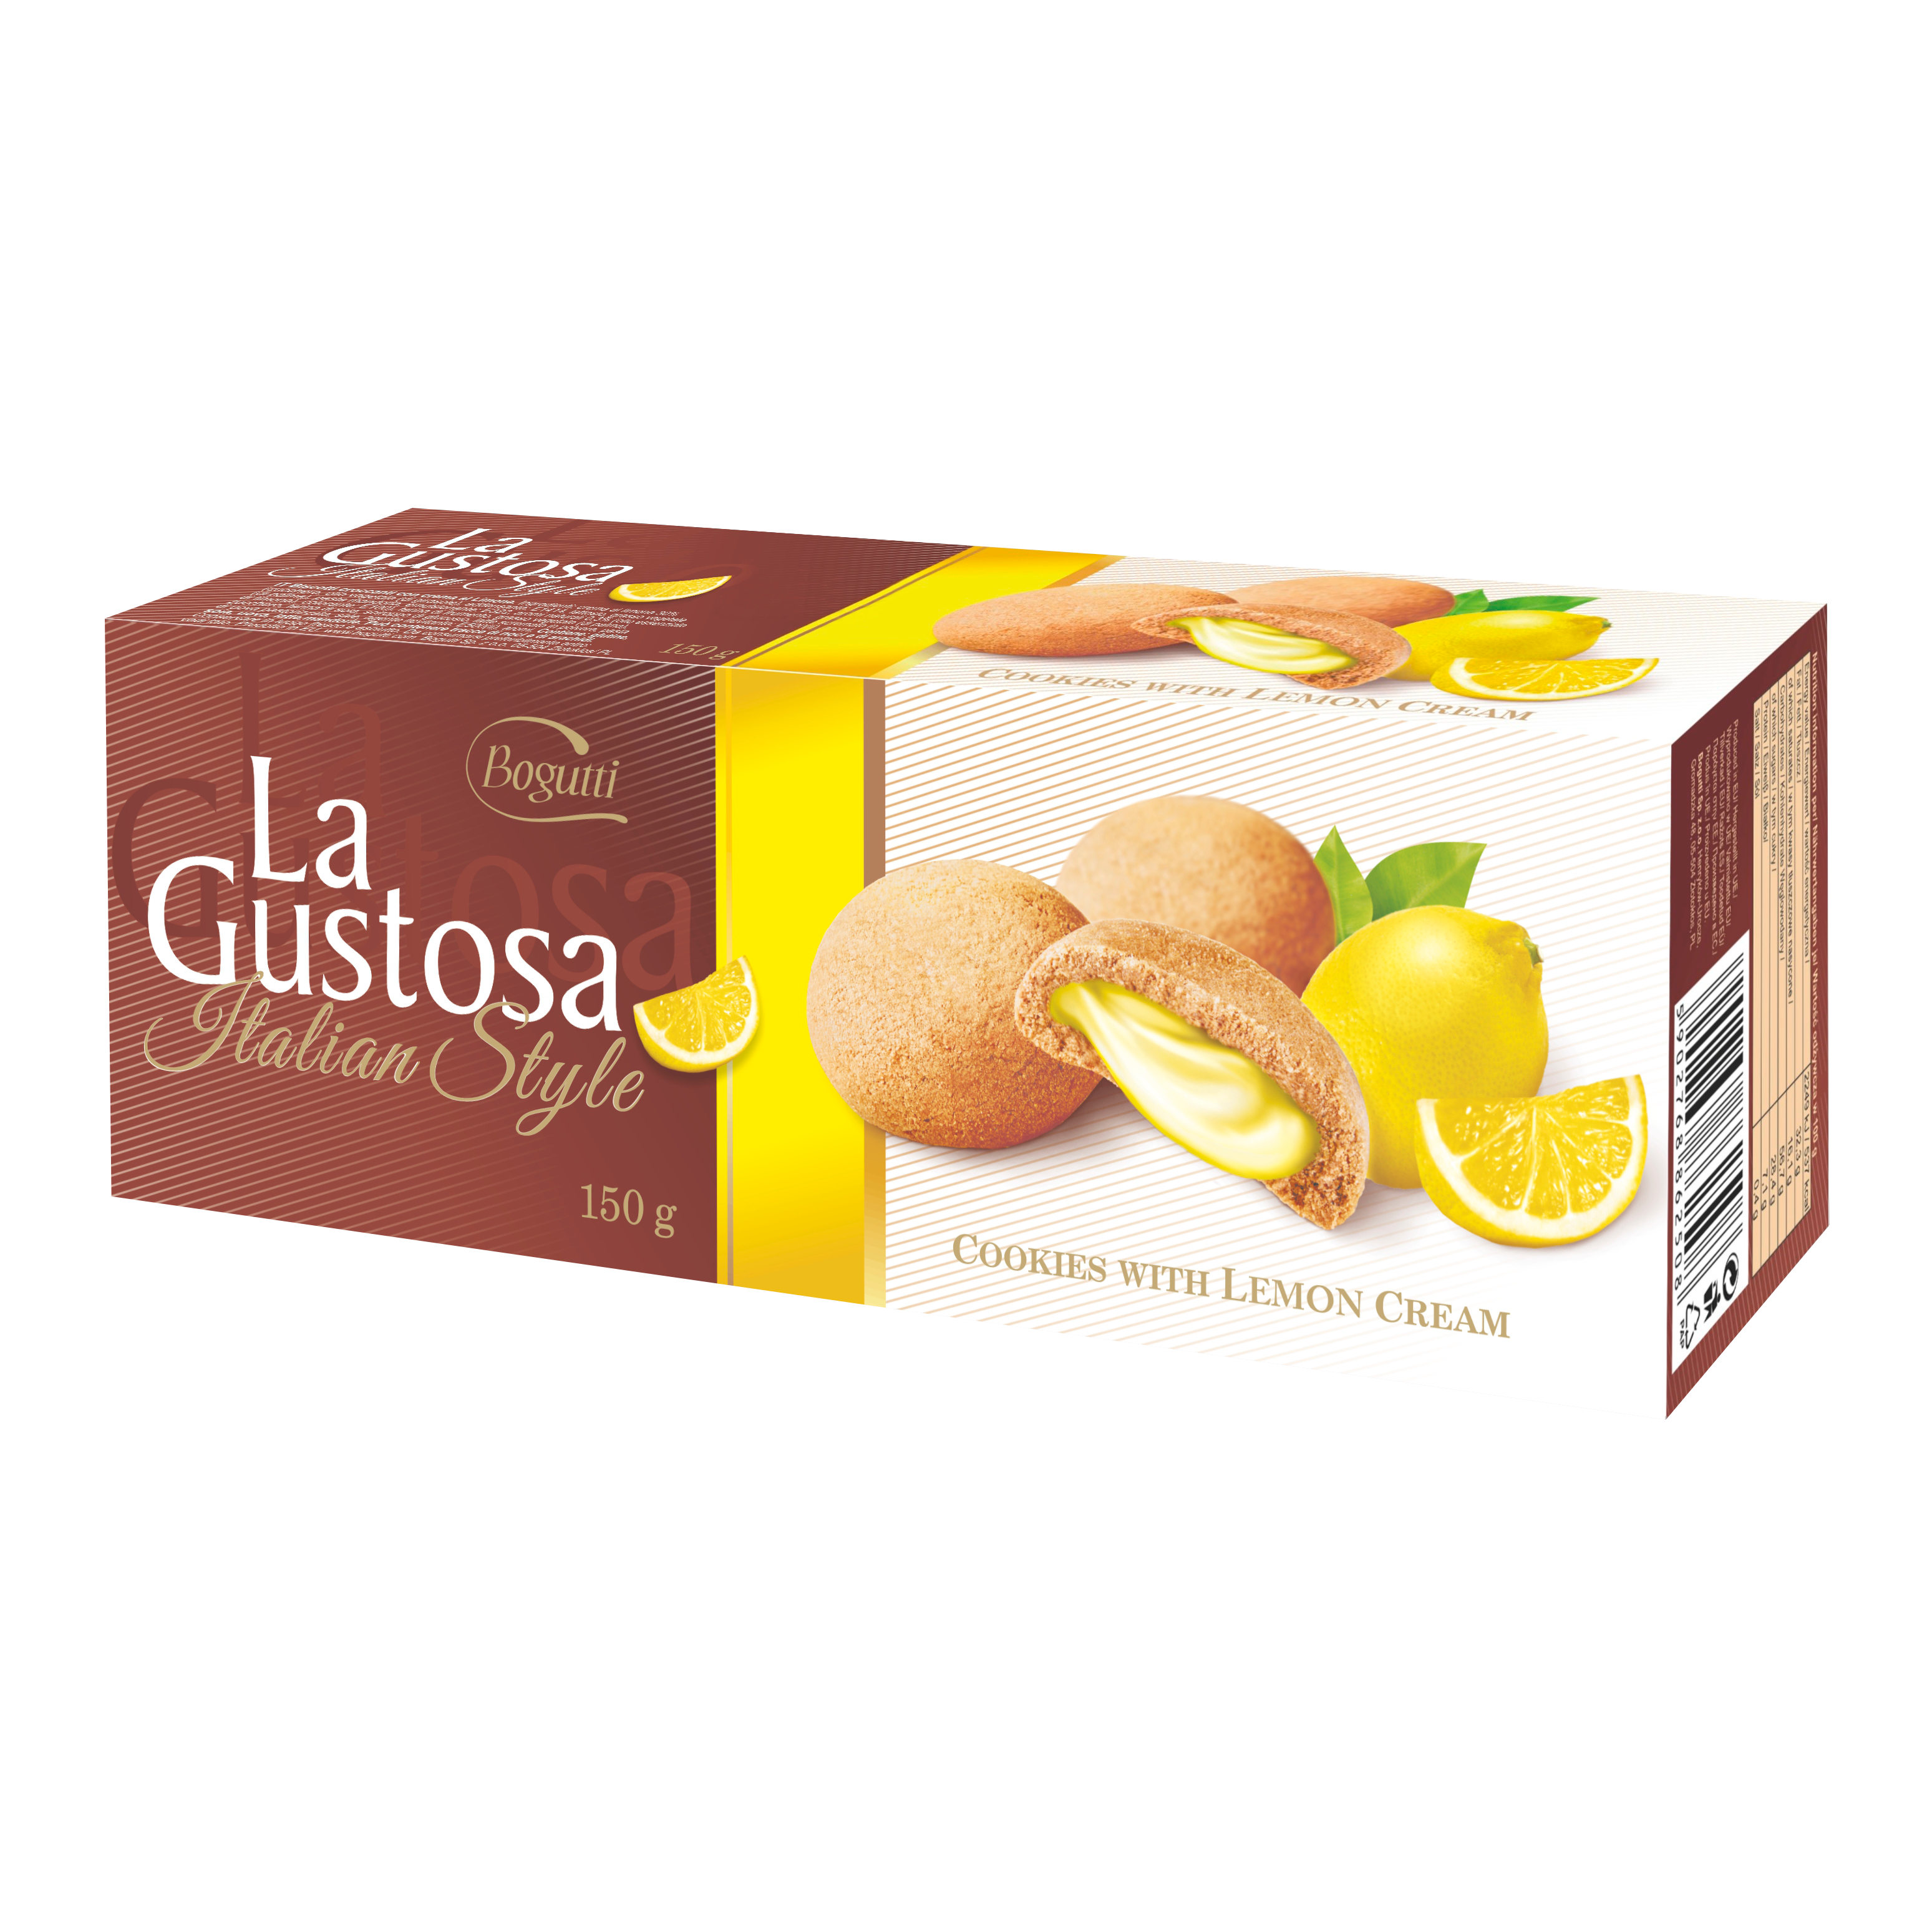 La Gustosa – Crunchy cookies with lemon cream